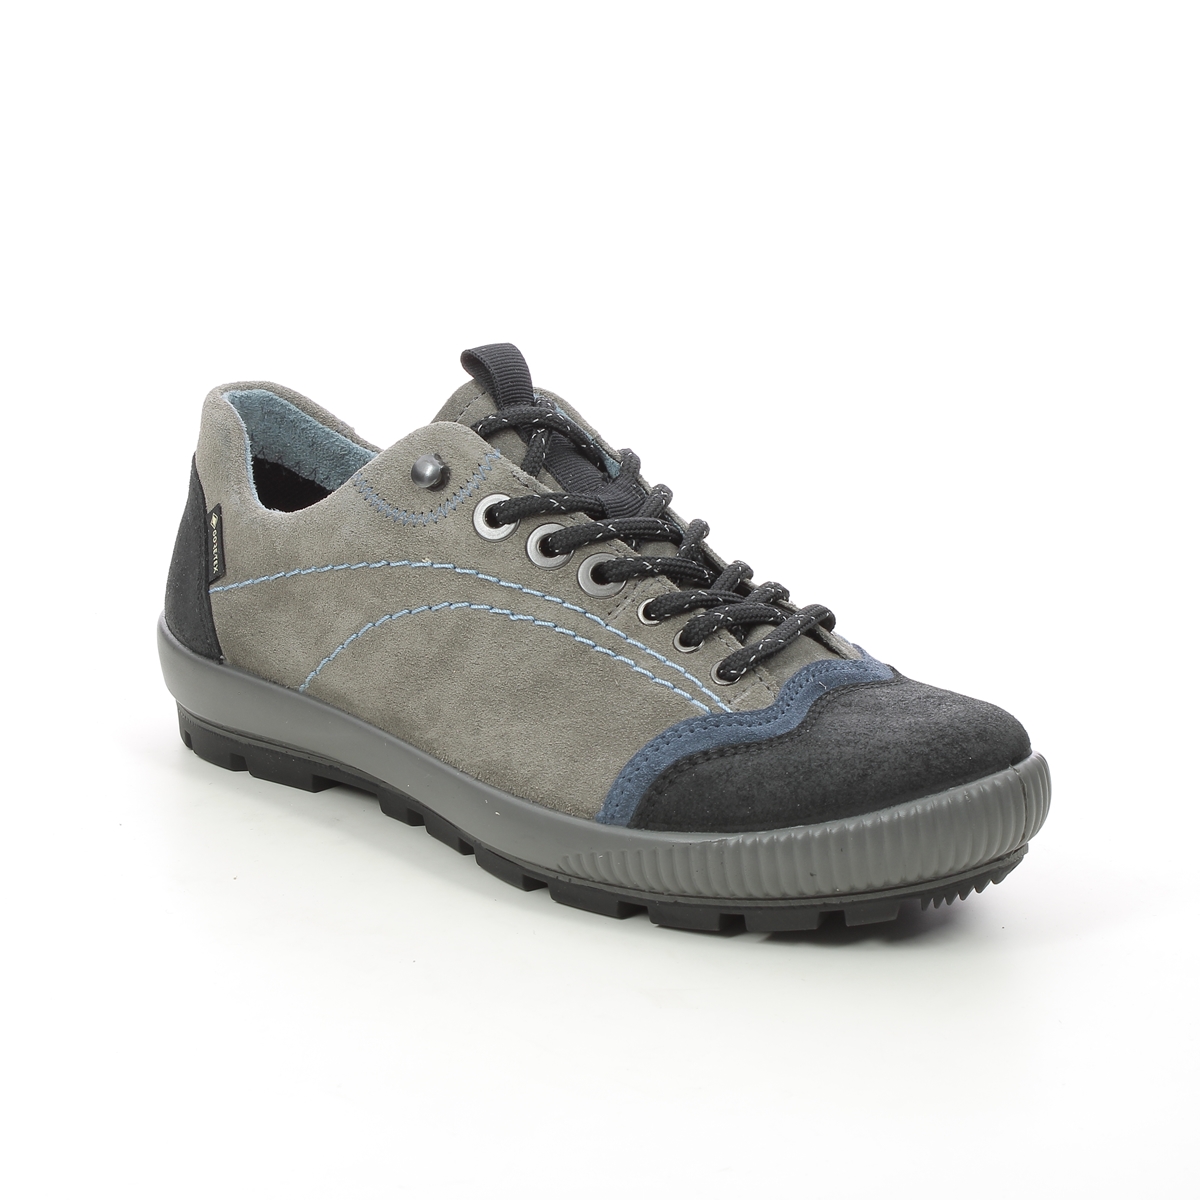 Legero Tanaro Trek Gtx Grey Suede Womens Walking Shoes 2000122-2800 In Size 6 In Plain Grey Suede